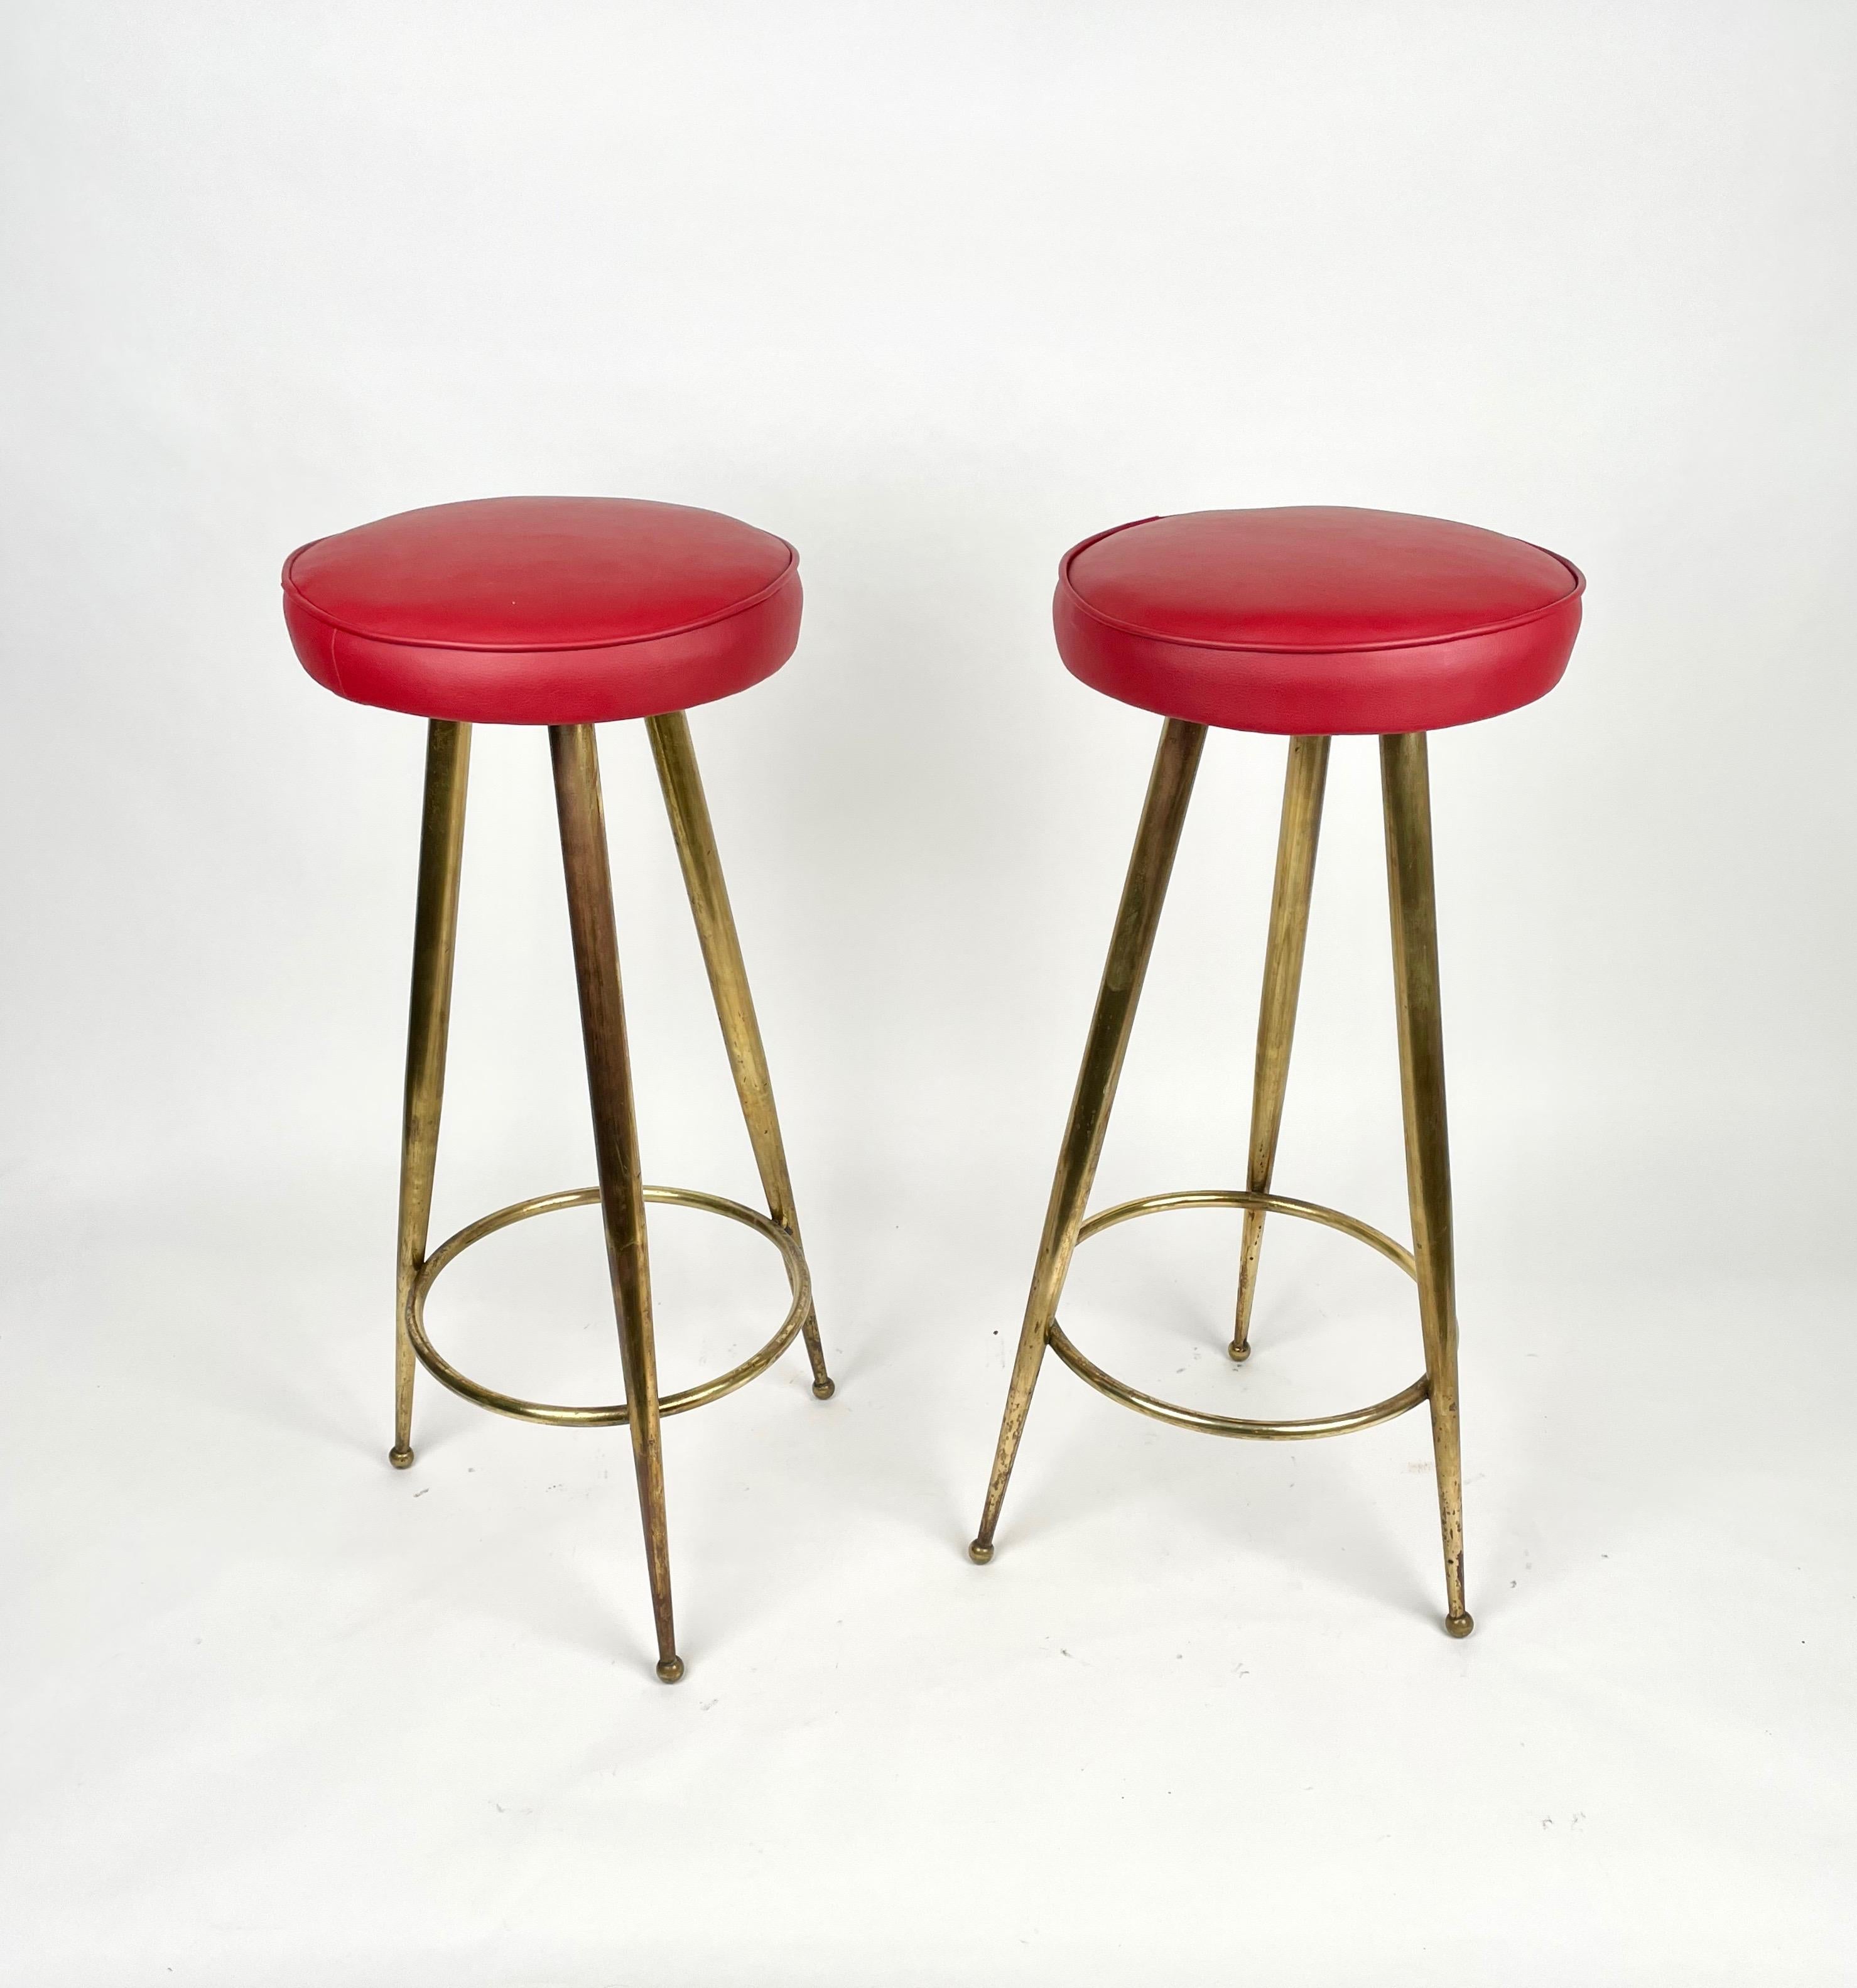 1950s bar stools